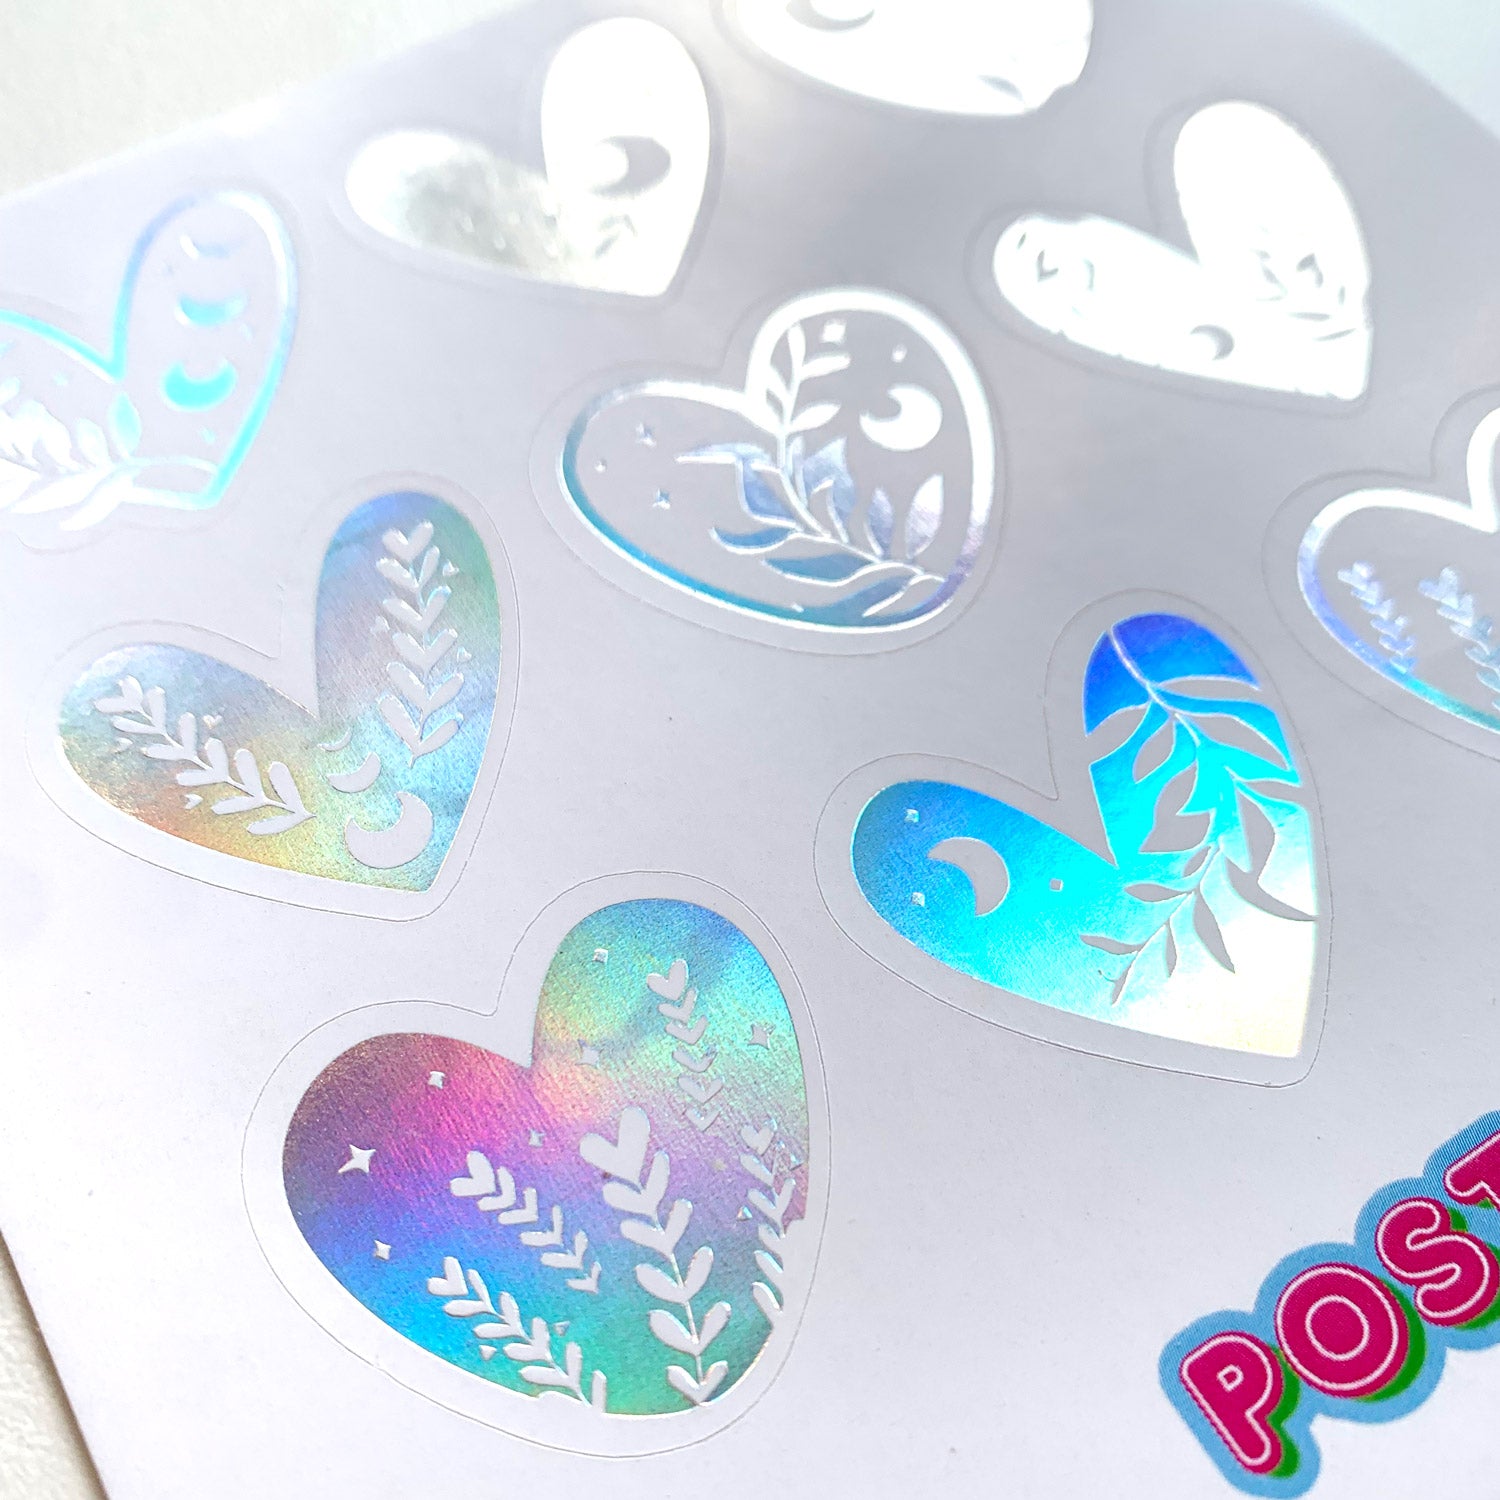 Life Hearts Hologram Square Sticker Sheet